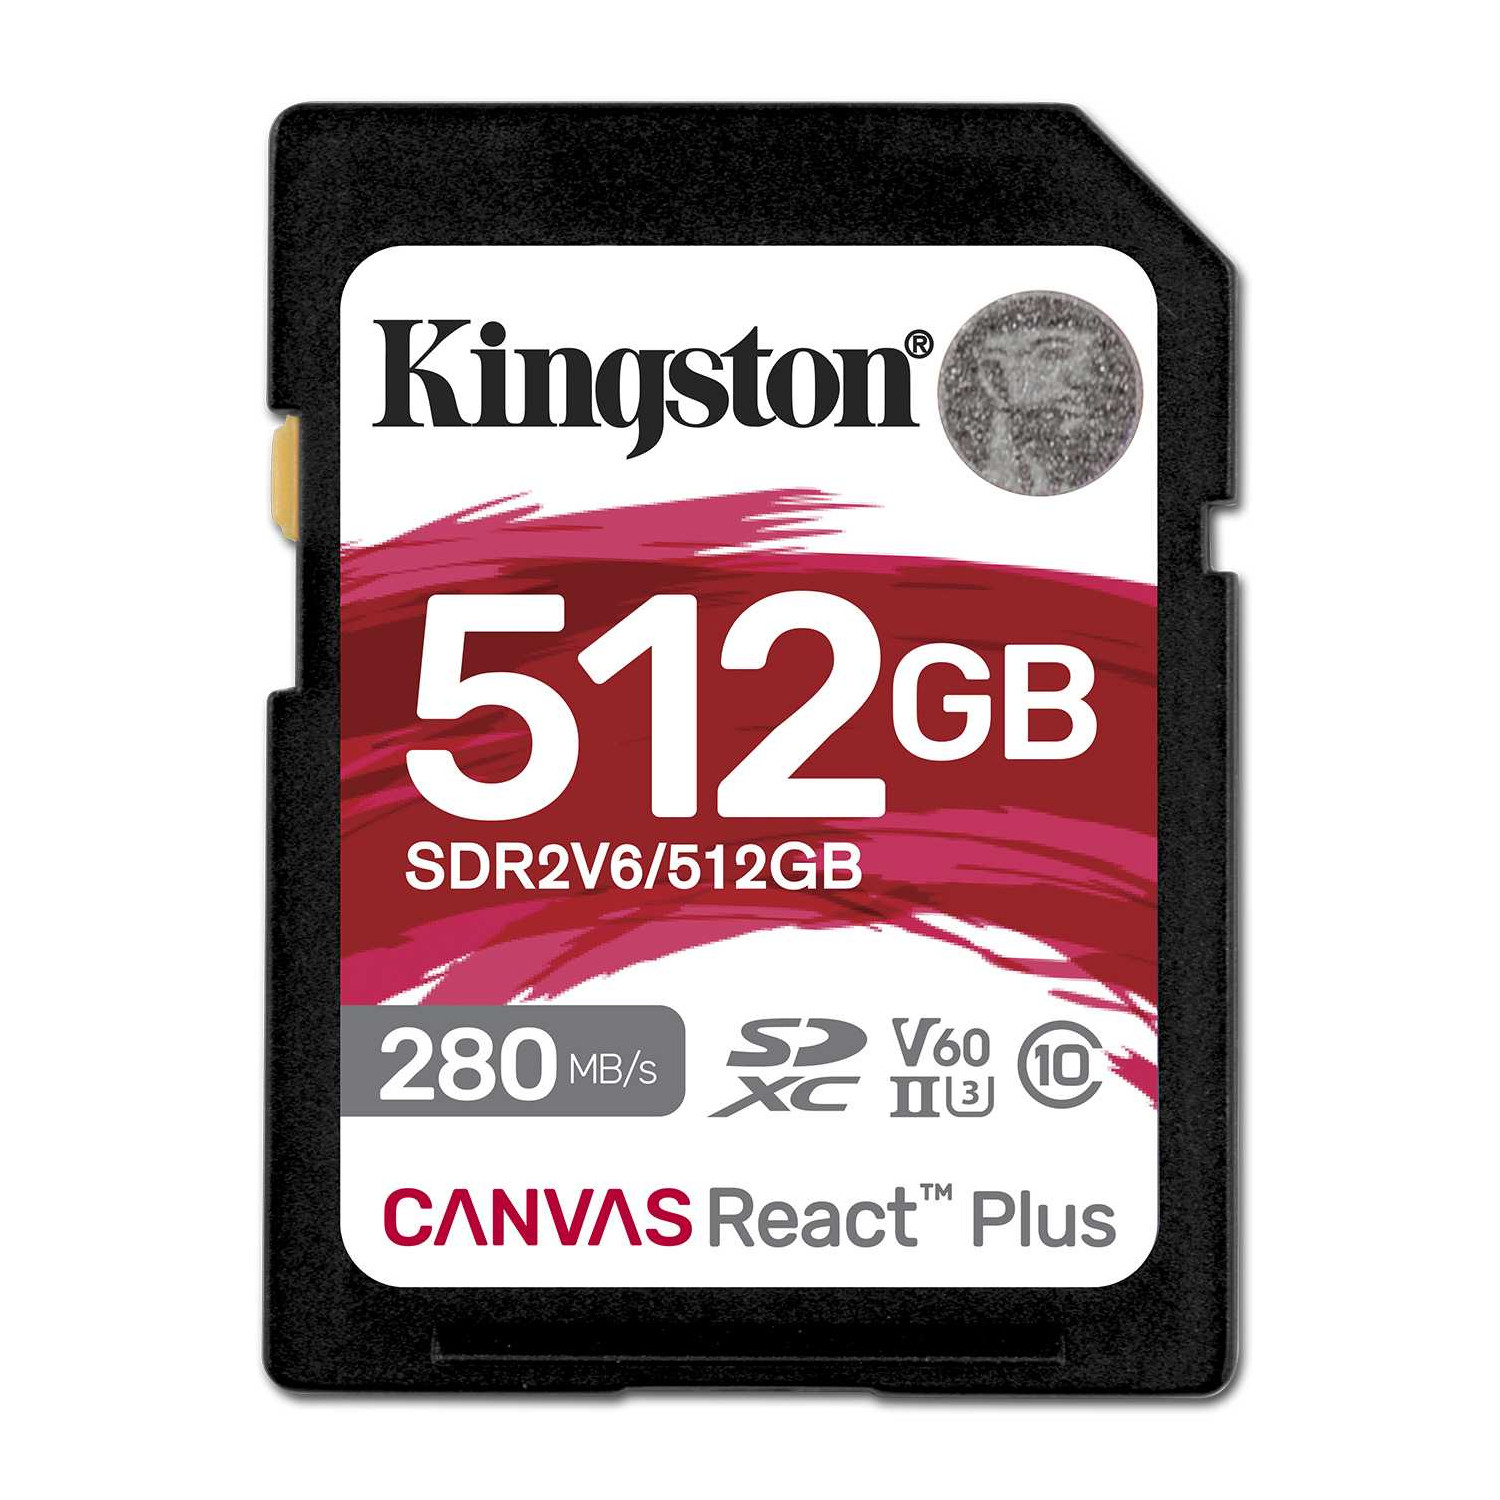 Kingston - SDR2V6-512GB -   